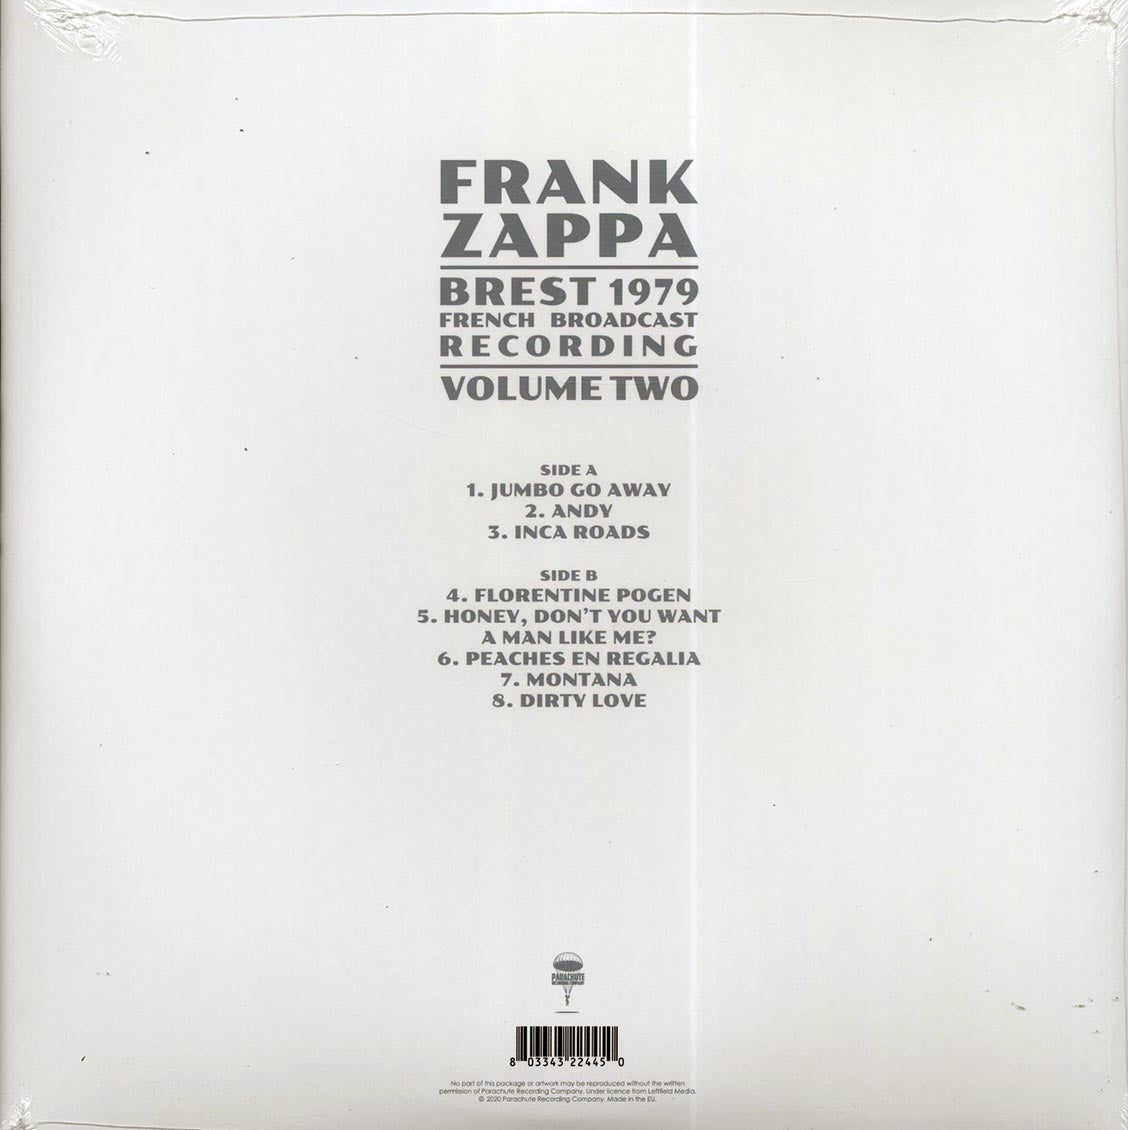 Frank Zappa - Brest 1979 Volume 2: French Broadcast Recording - Vinyl LP, LP